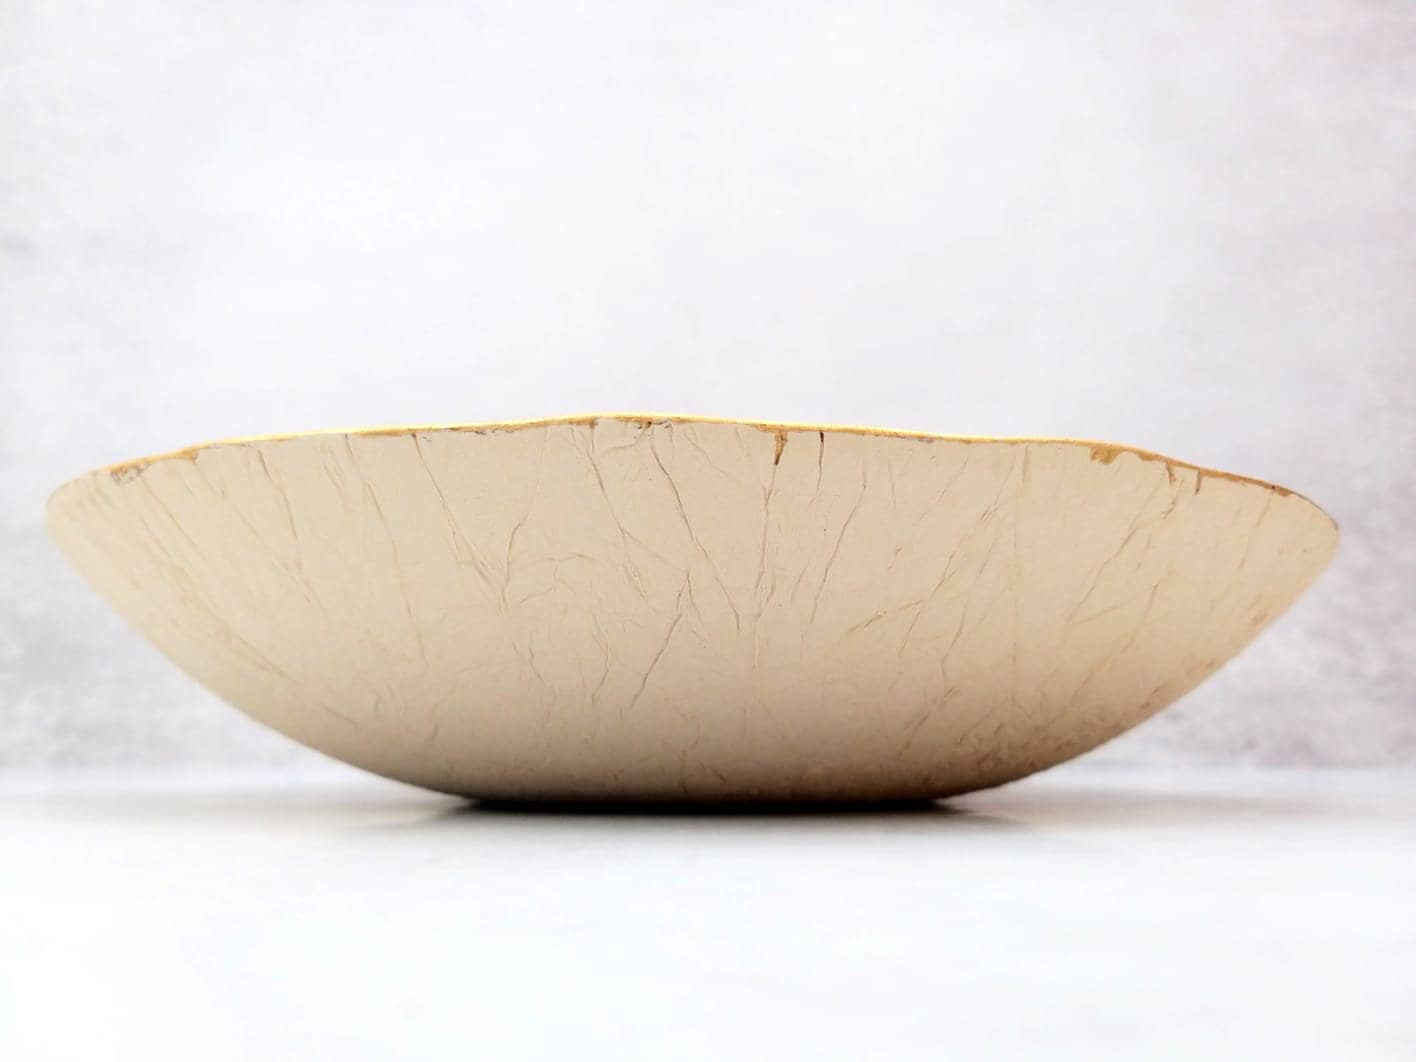 White Ceramic Fruit Bowl